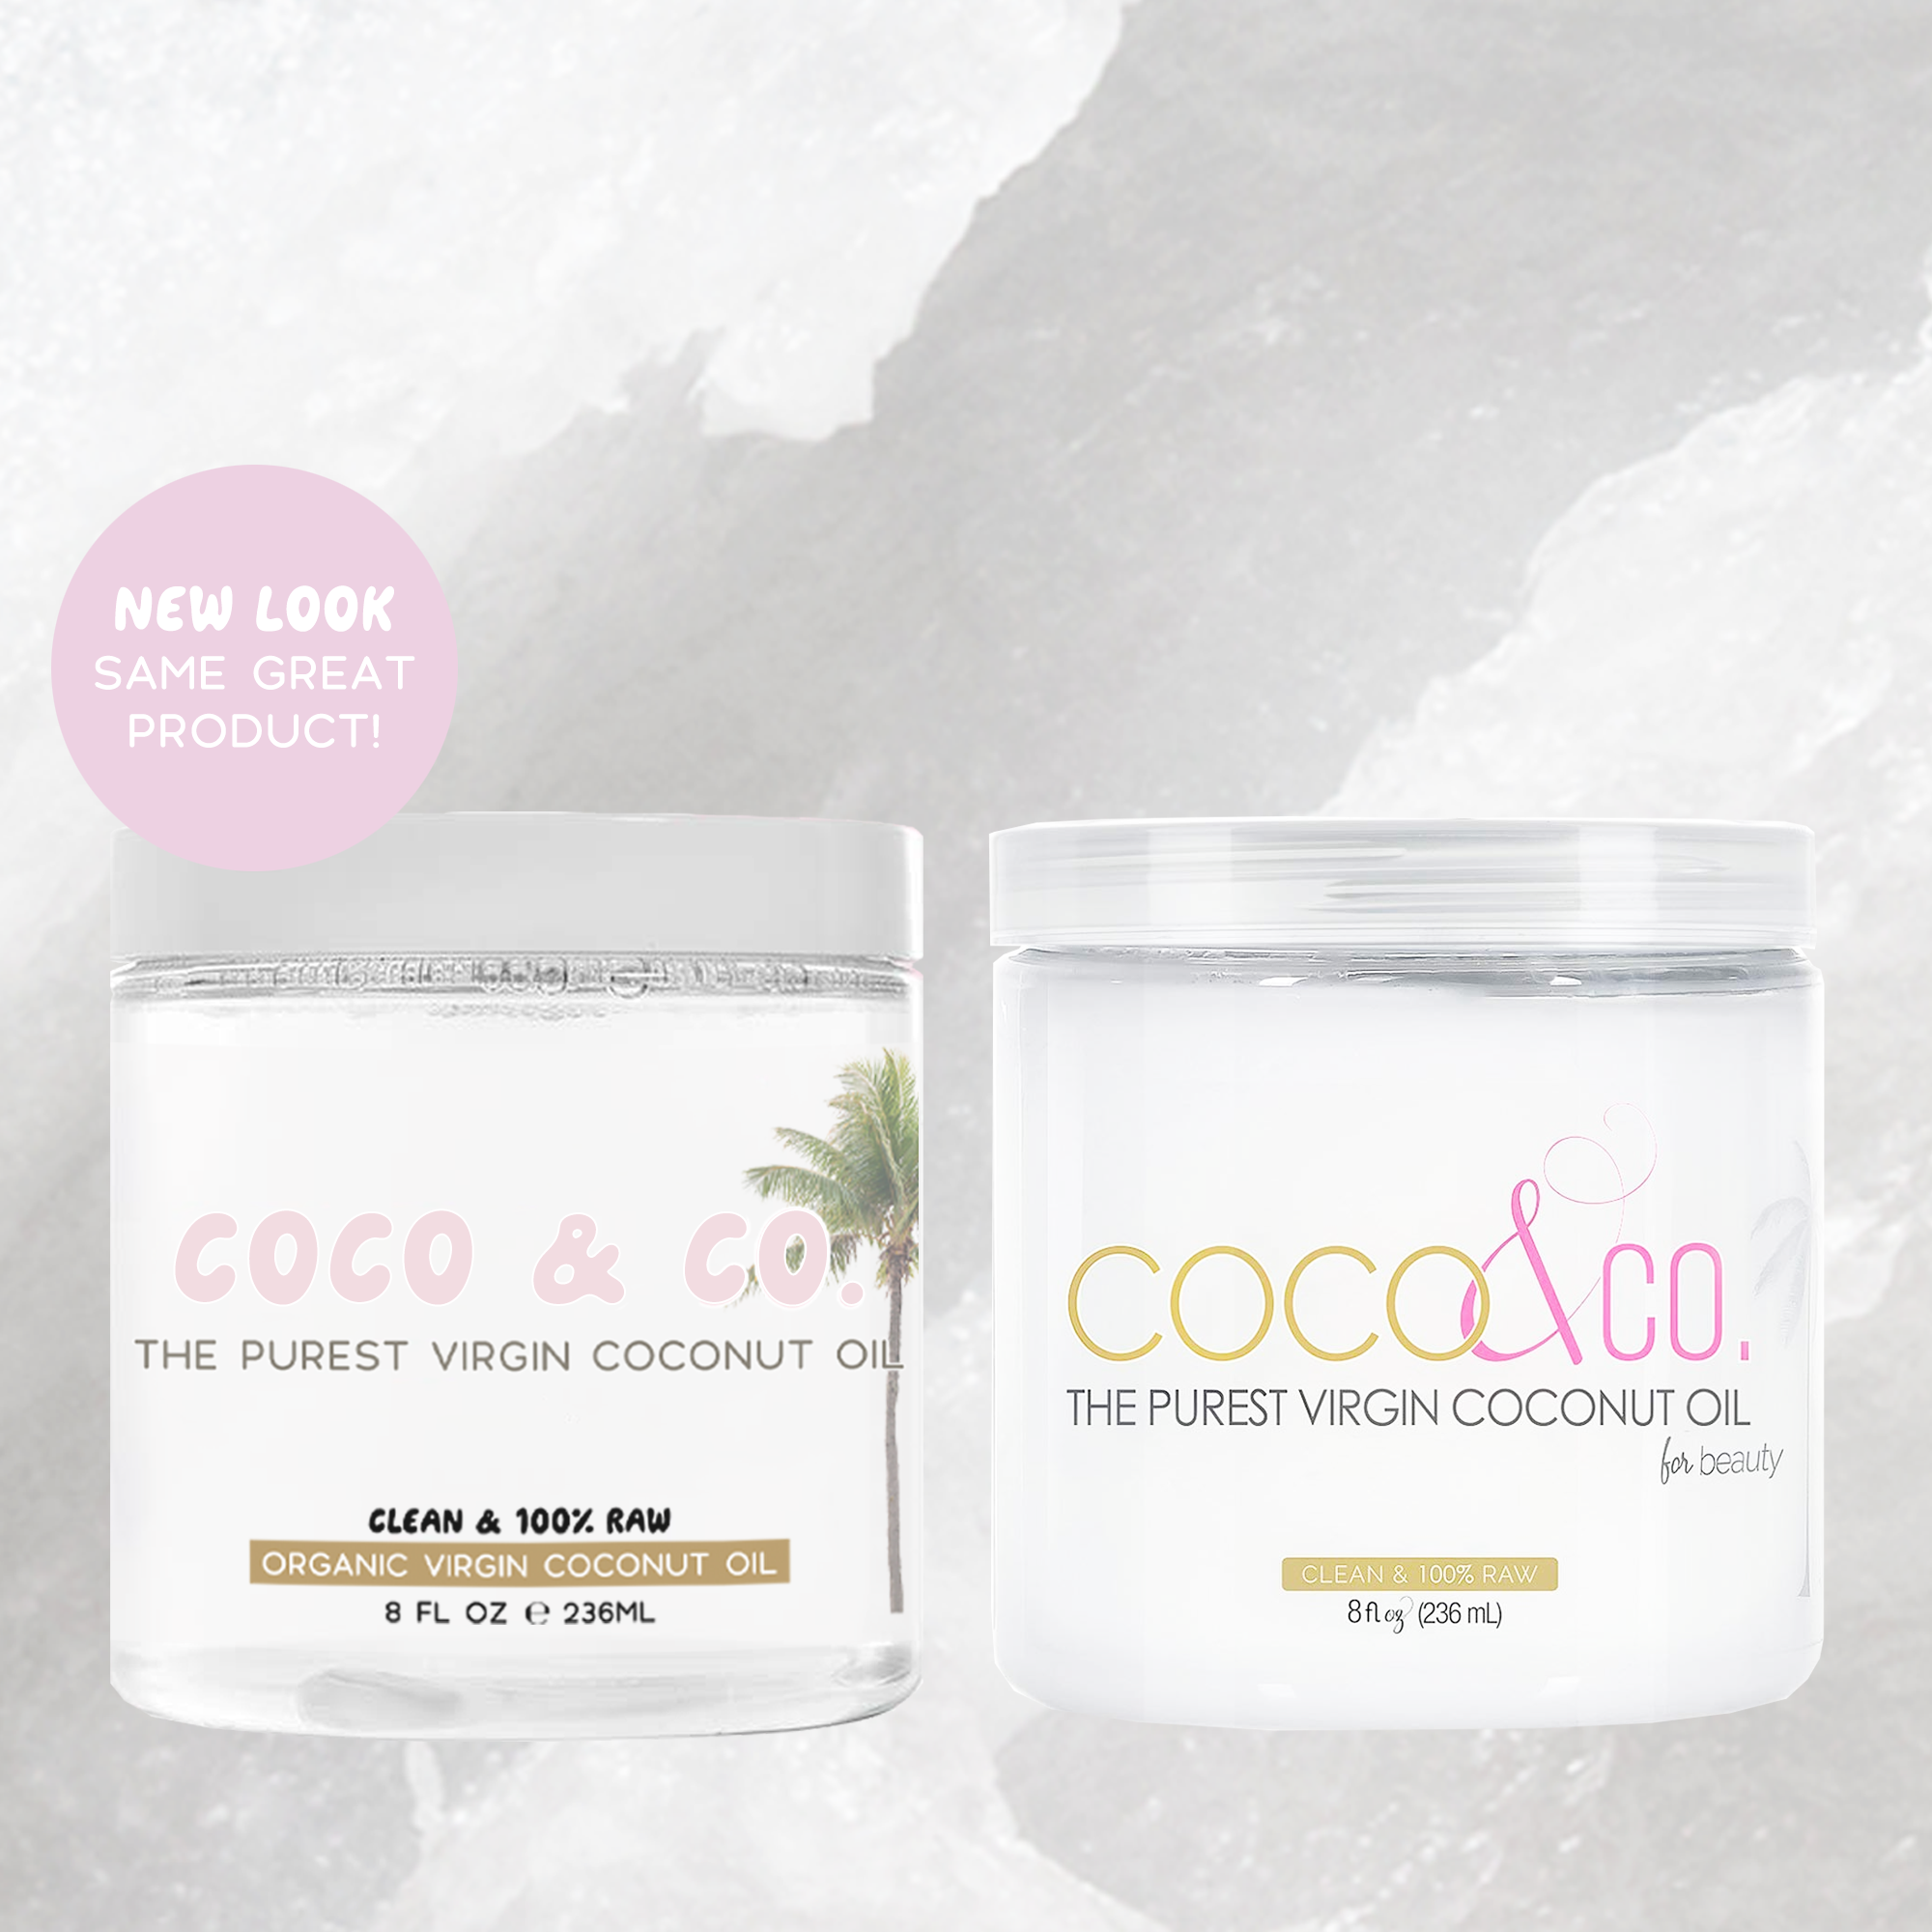 Aceite De Coco Coconut Oil 4.05 fl.oz